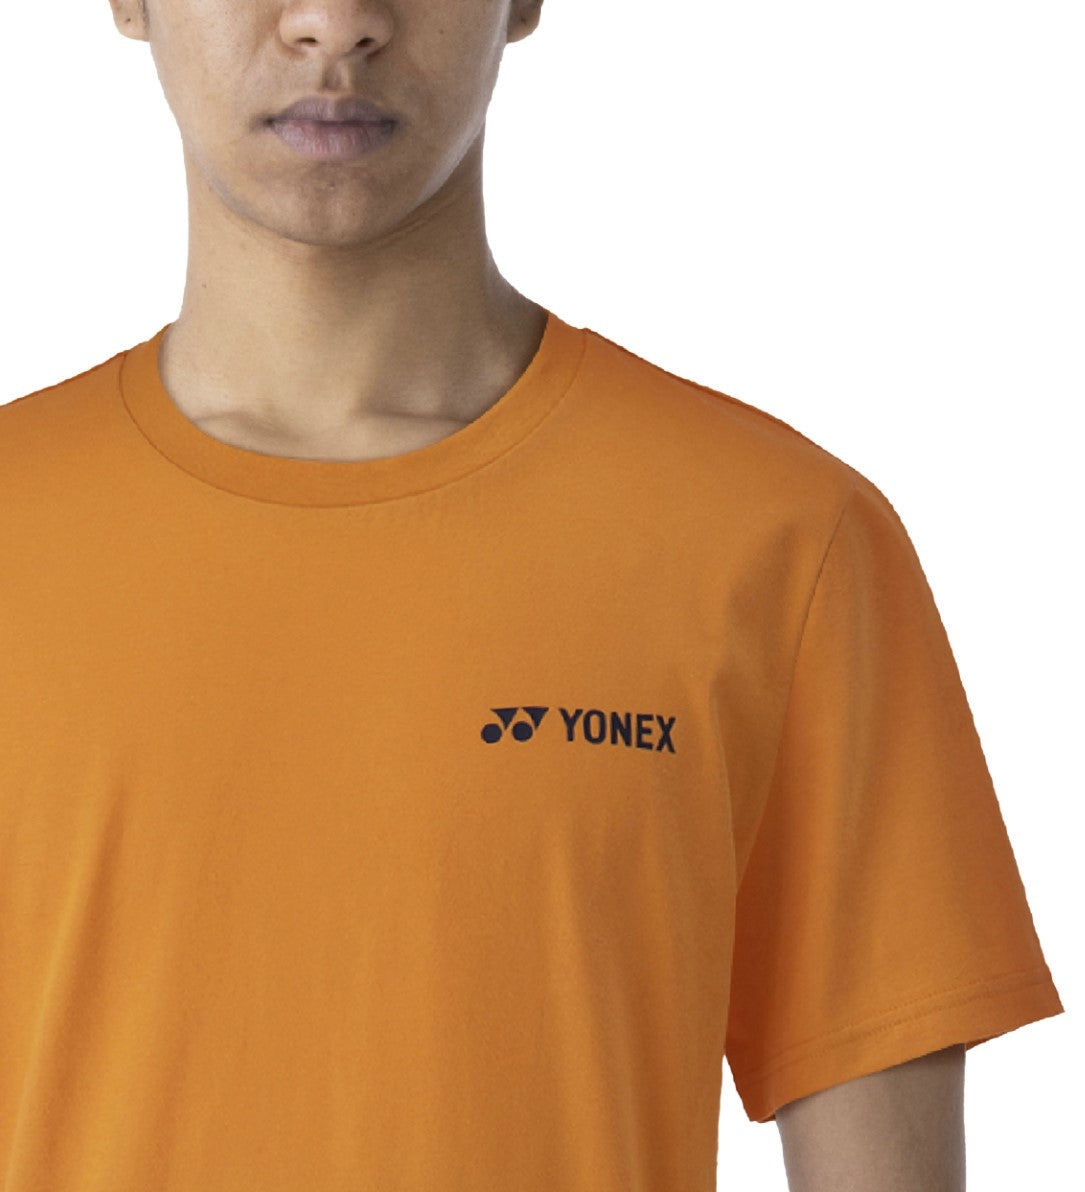 Yonex Unisex Shirt 16619